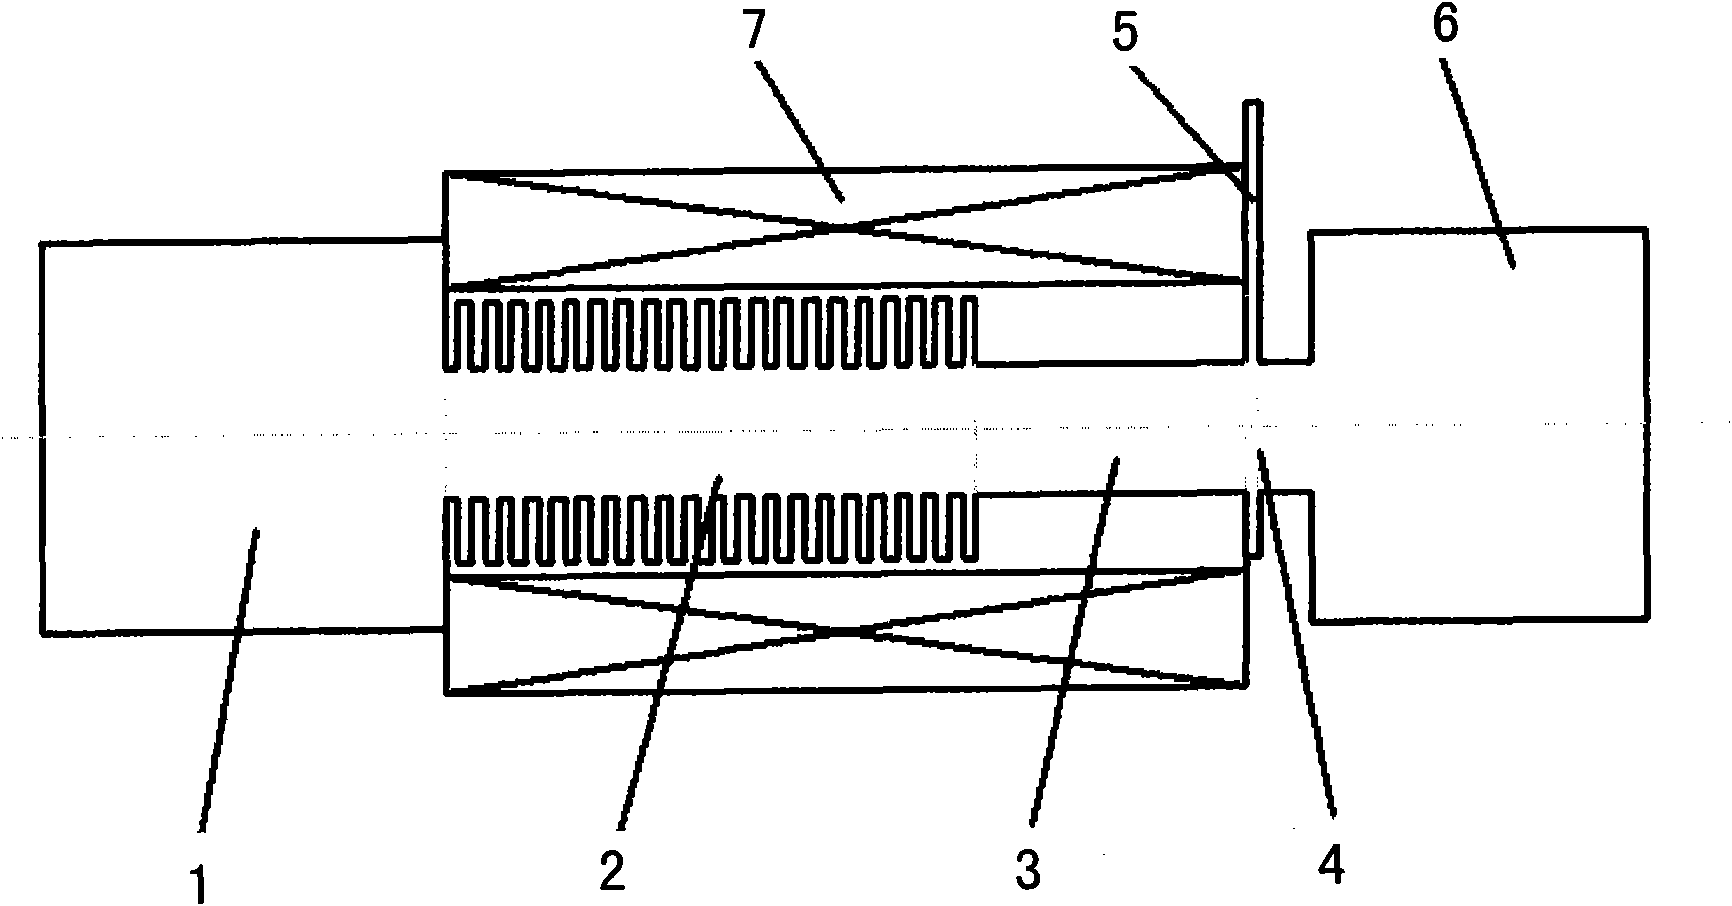 Distribution terahertz oscillator